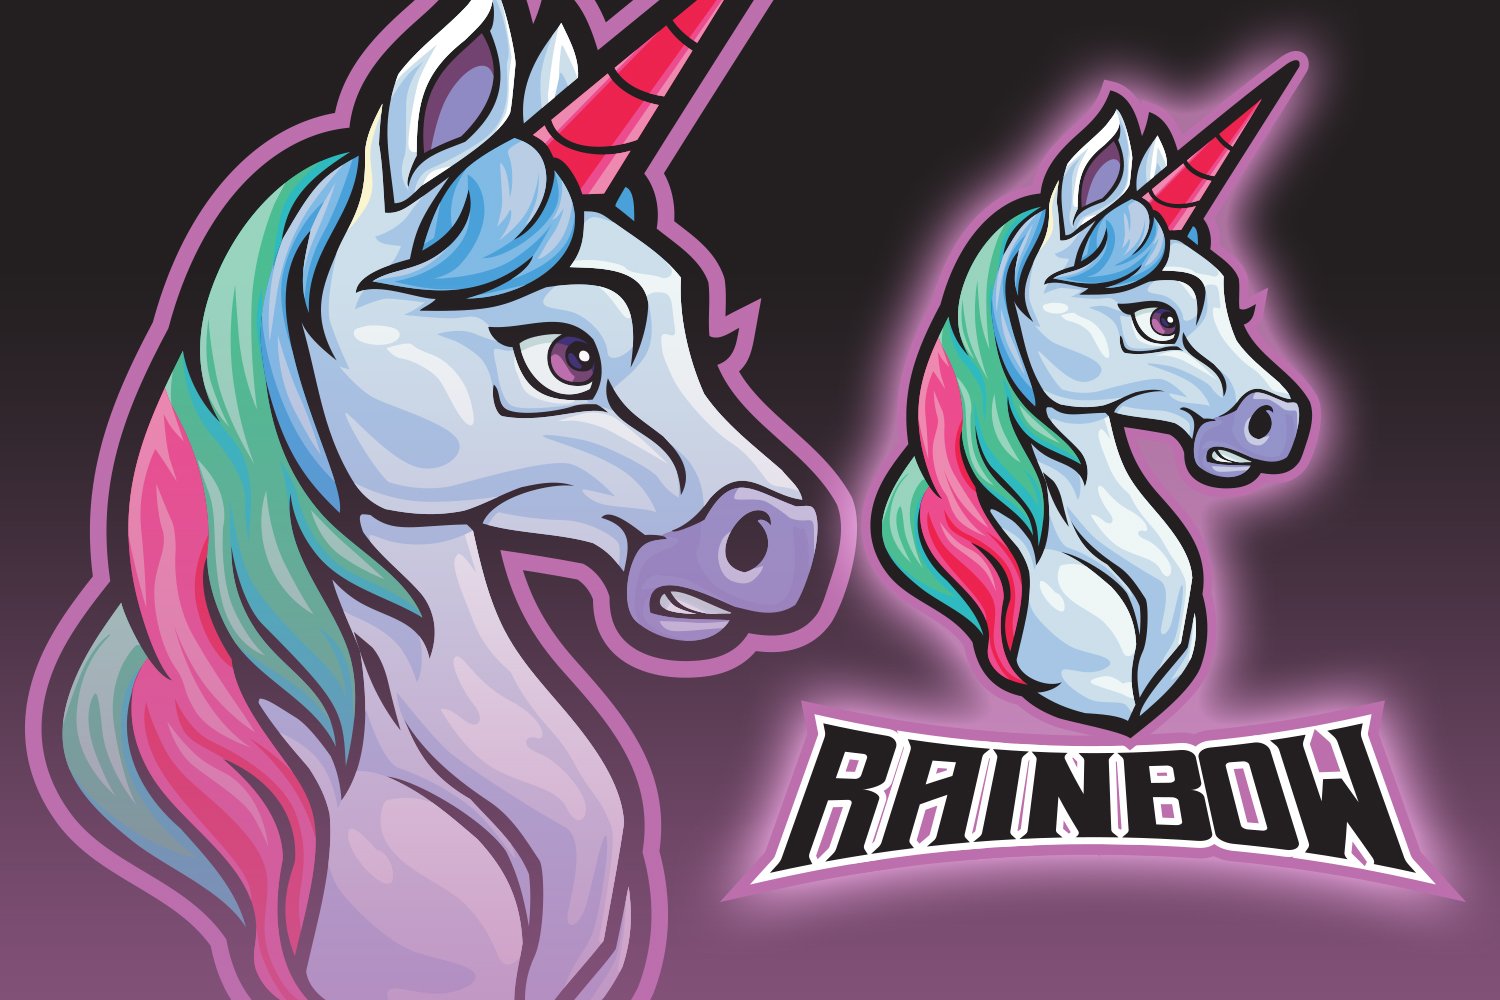 Unicorn Esport Logo cover image.